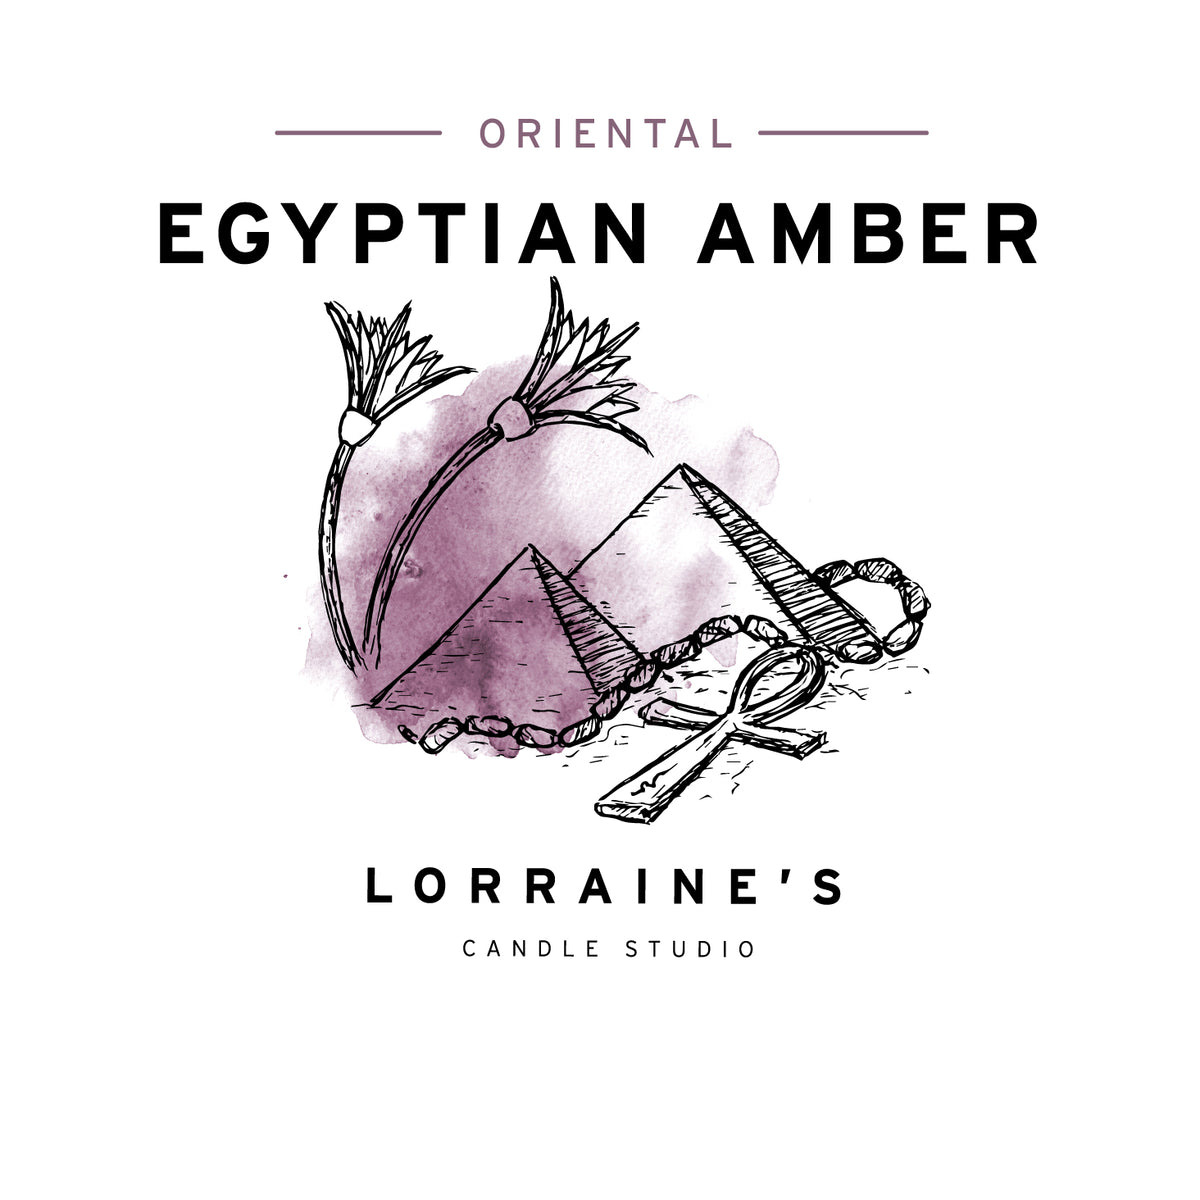 Egyptian Amber